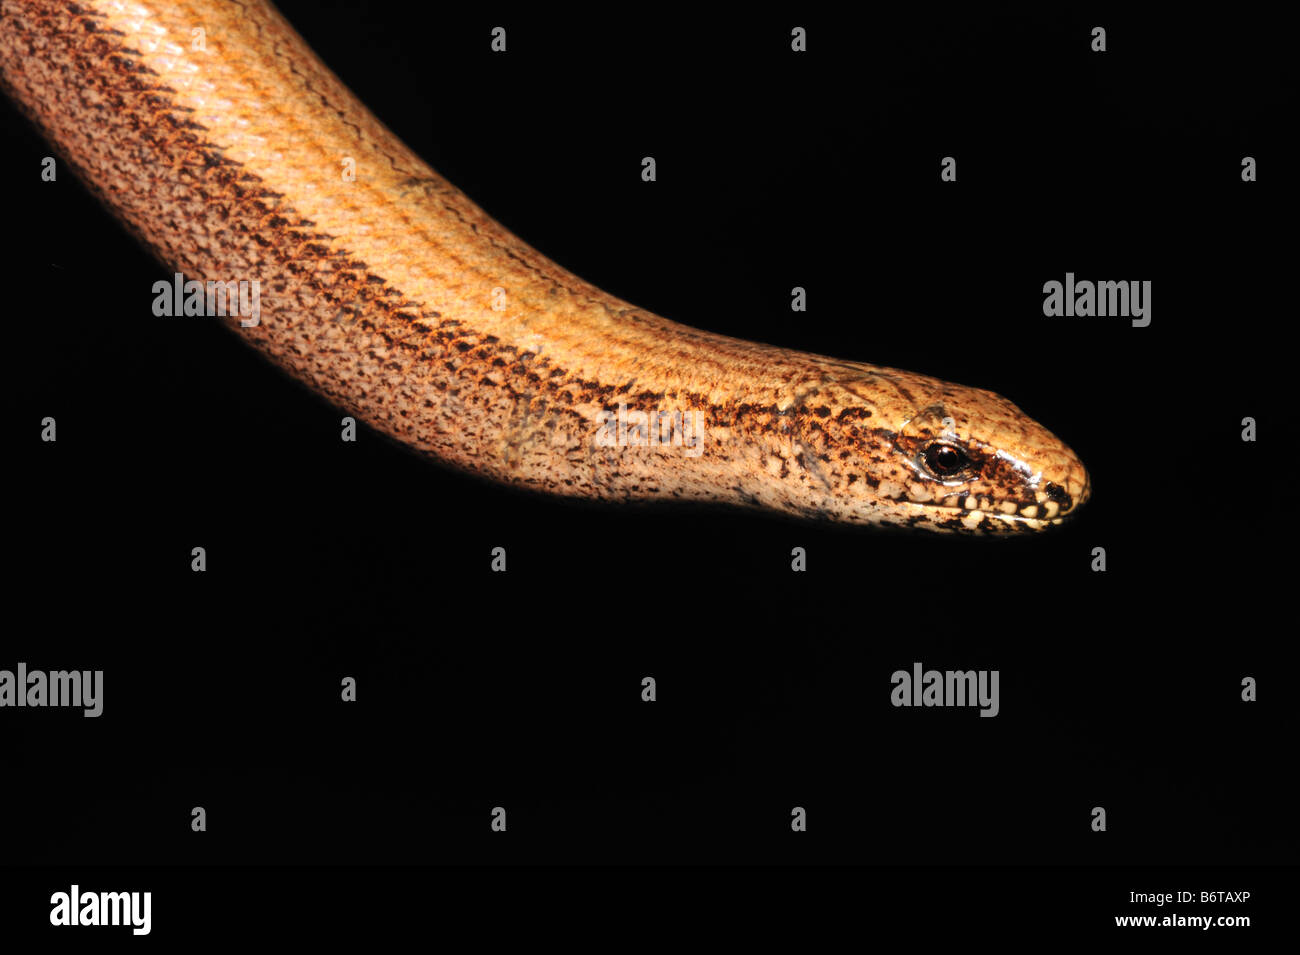 Slow worm - Anguis fragilis - against a dark background Stock Photo